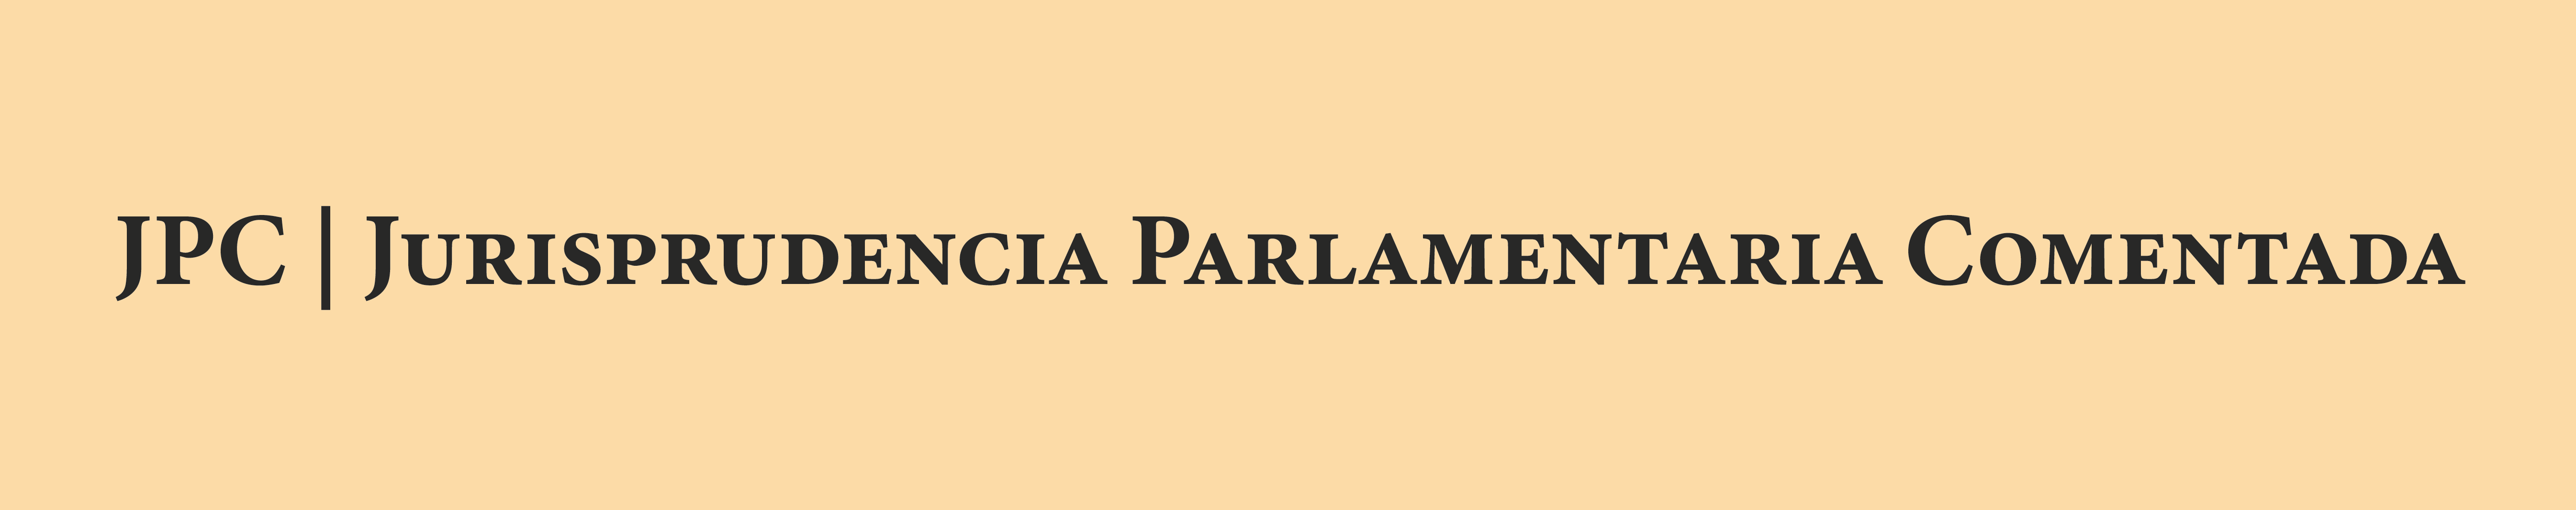 Jurisprudencia Parlamentaria Comentada